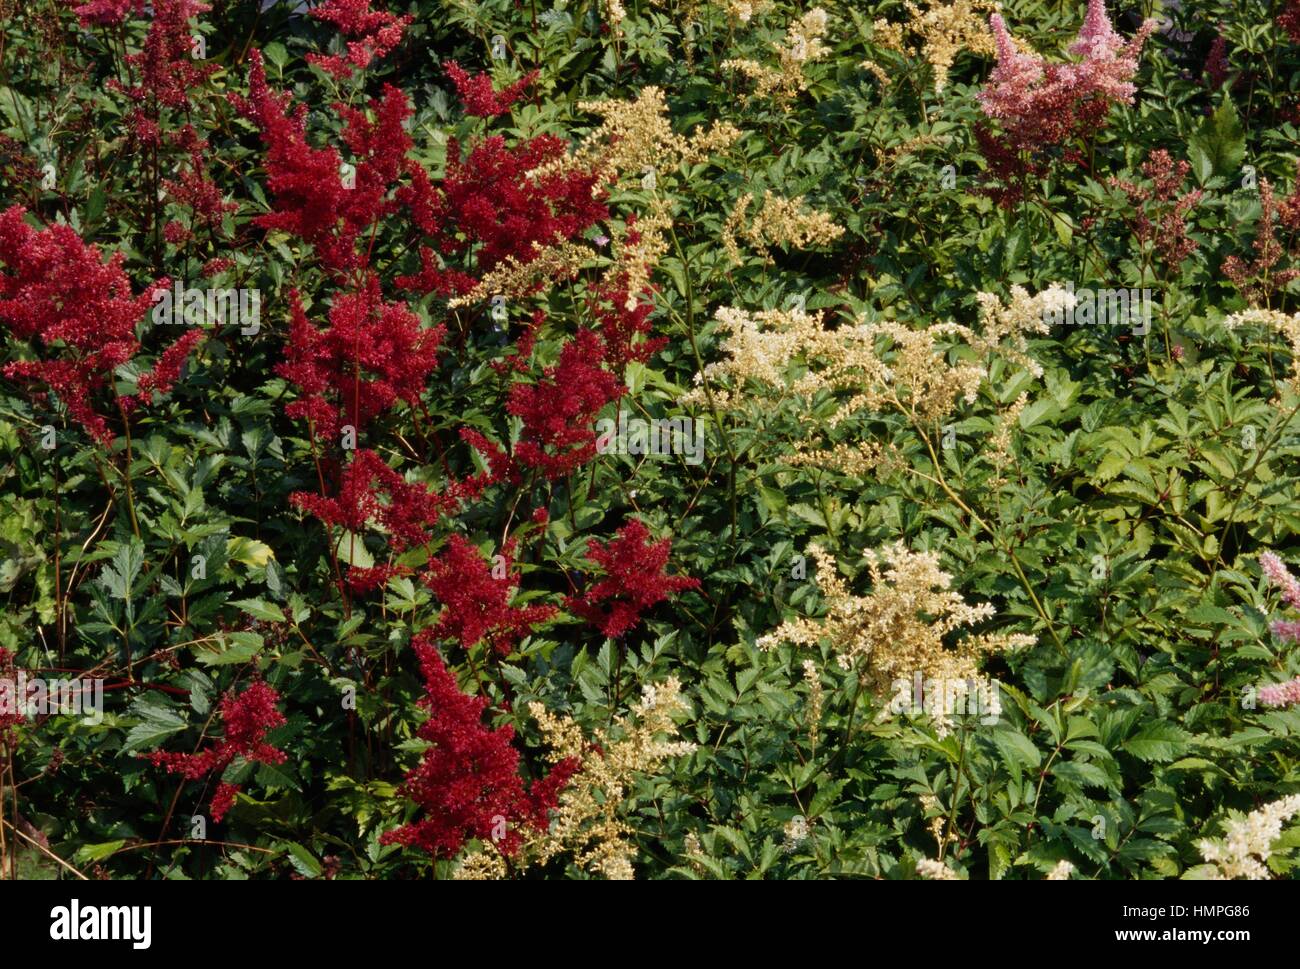 Astilbe Fanal and Astilbe Deutschland in bloom, Saxifragaceae. Stock Photo